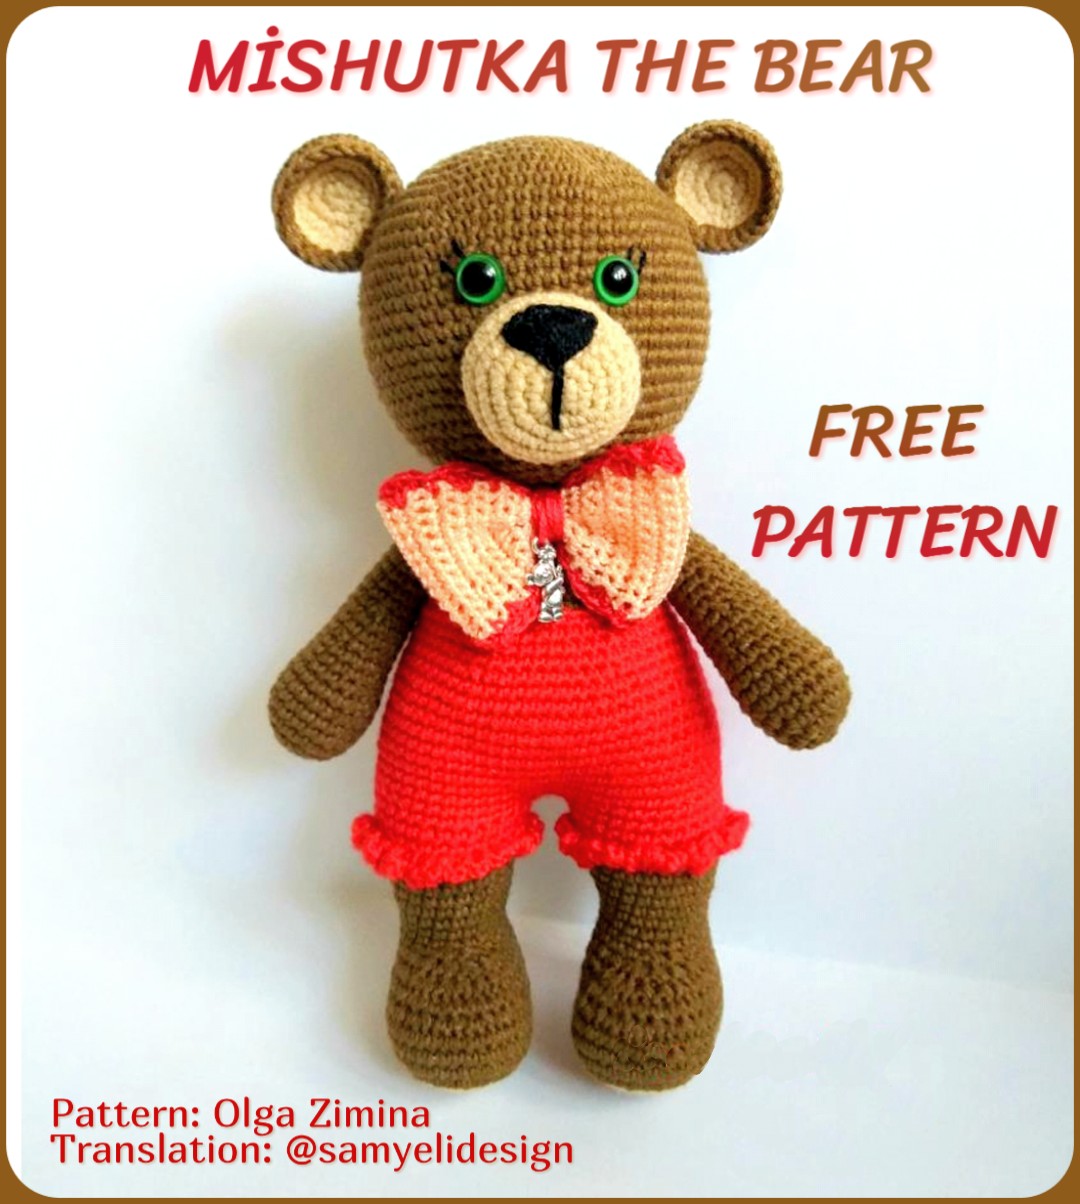 samyelinin-rg-leri-m-shutka-the-bear-free-english-pattern